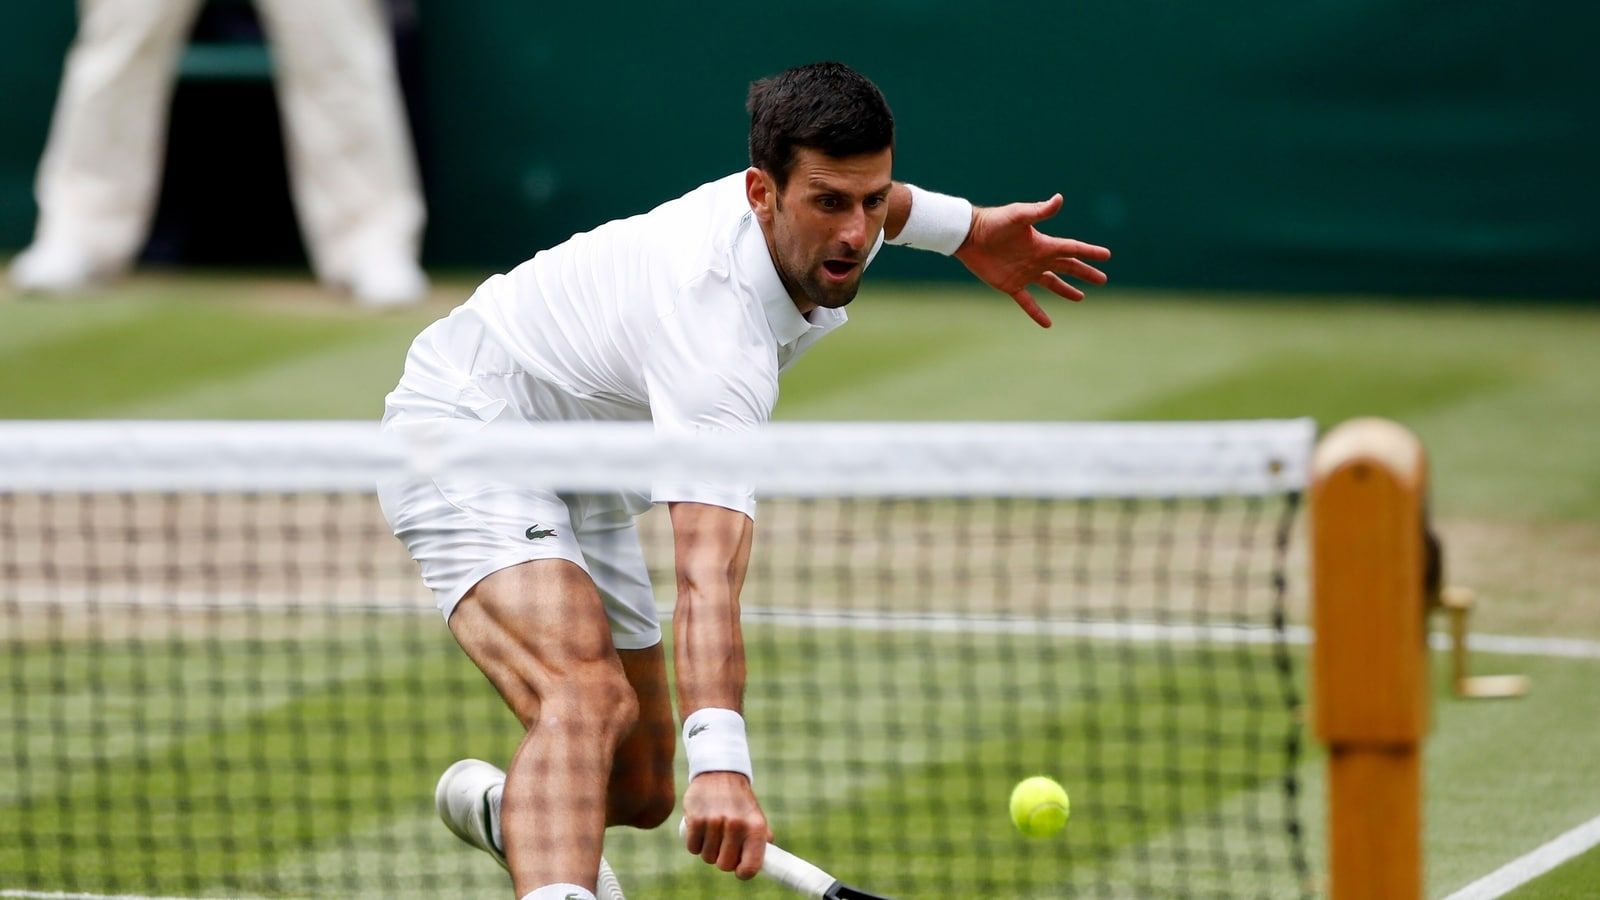 Exactly where I want to be': Novak Djokovic ahead of Wimbledon semifinal against Denis Shapovalov